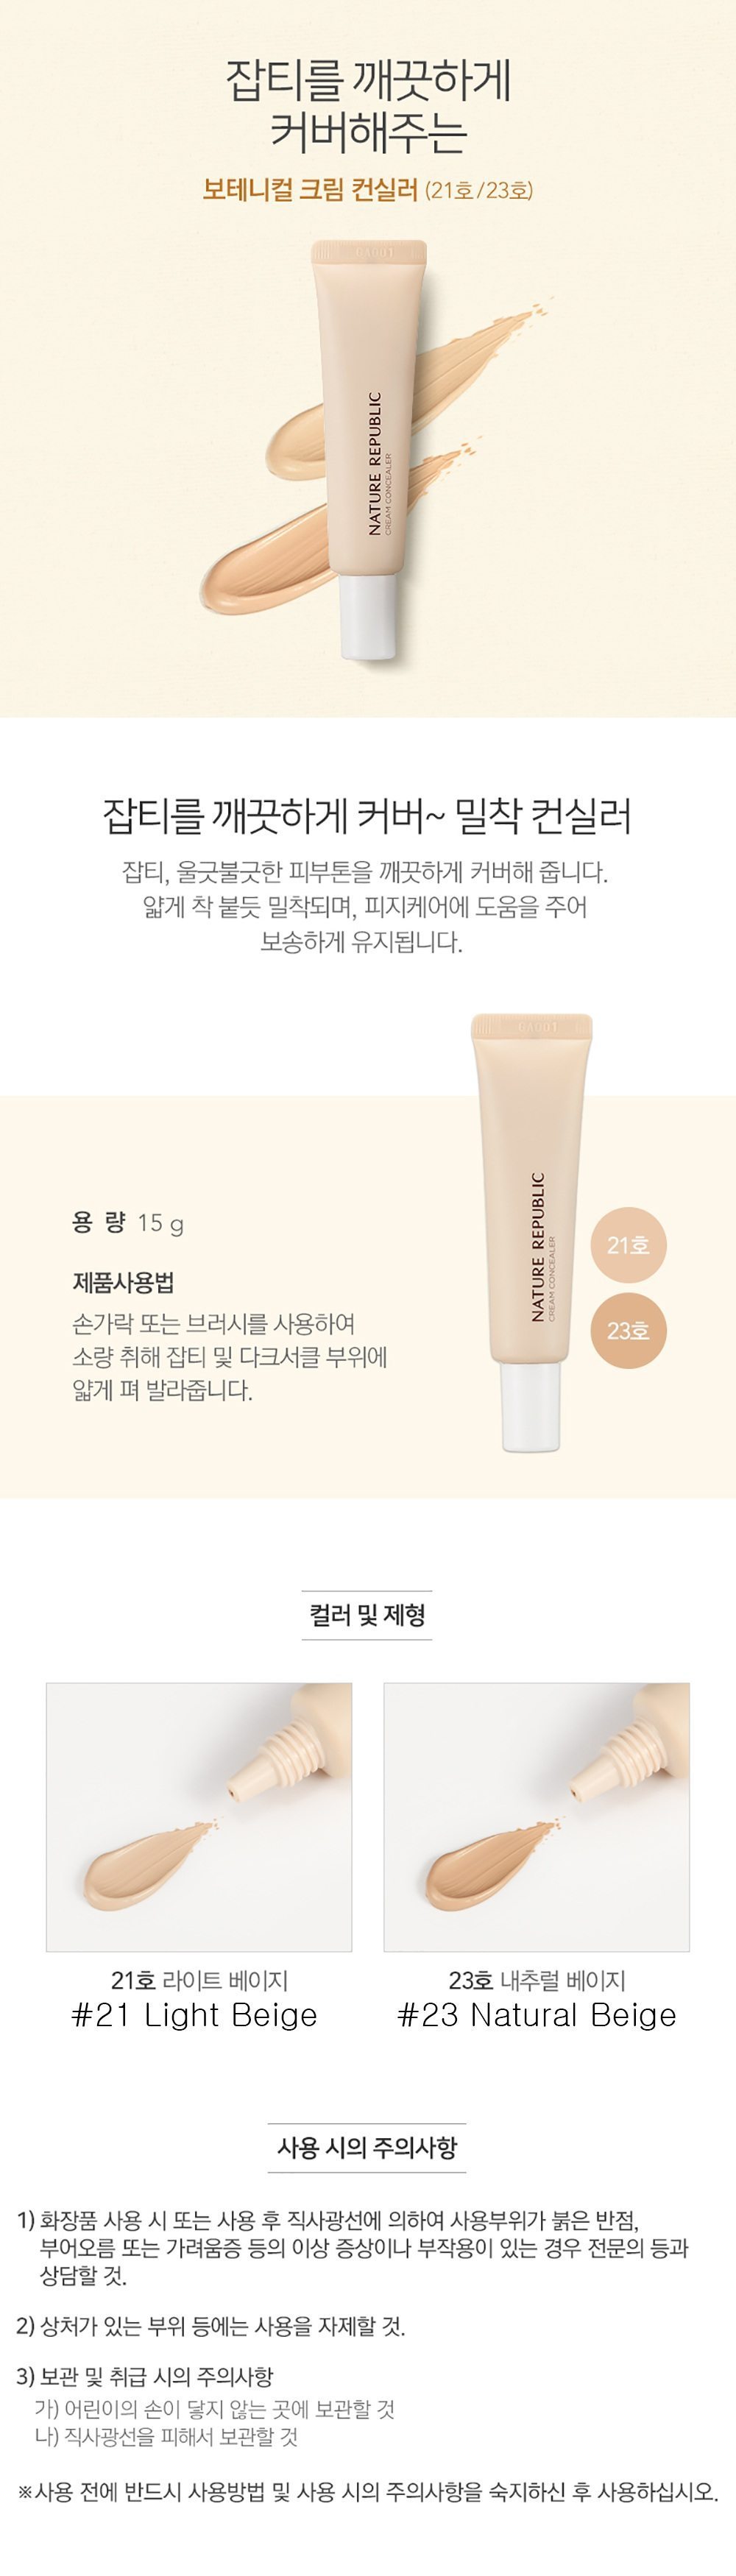 Nature Republic Botanical Cream Concealer korean cosmetic makeup product online shop malaysia singapore macau1